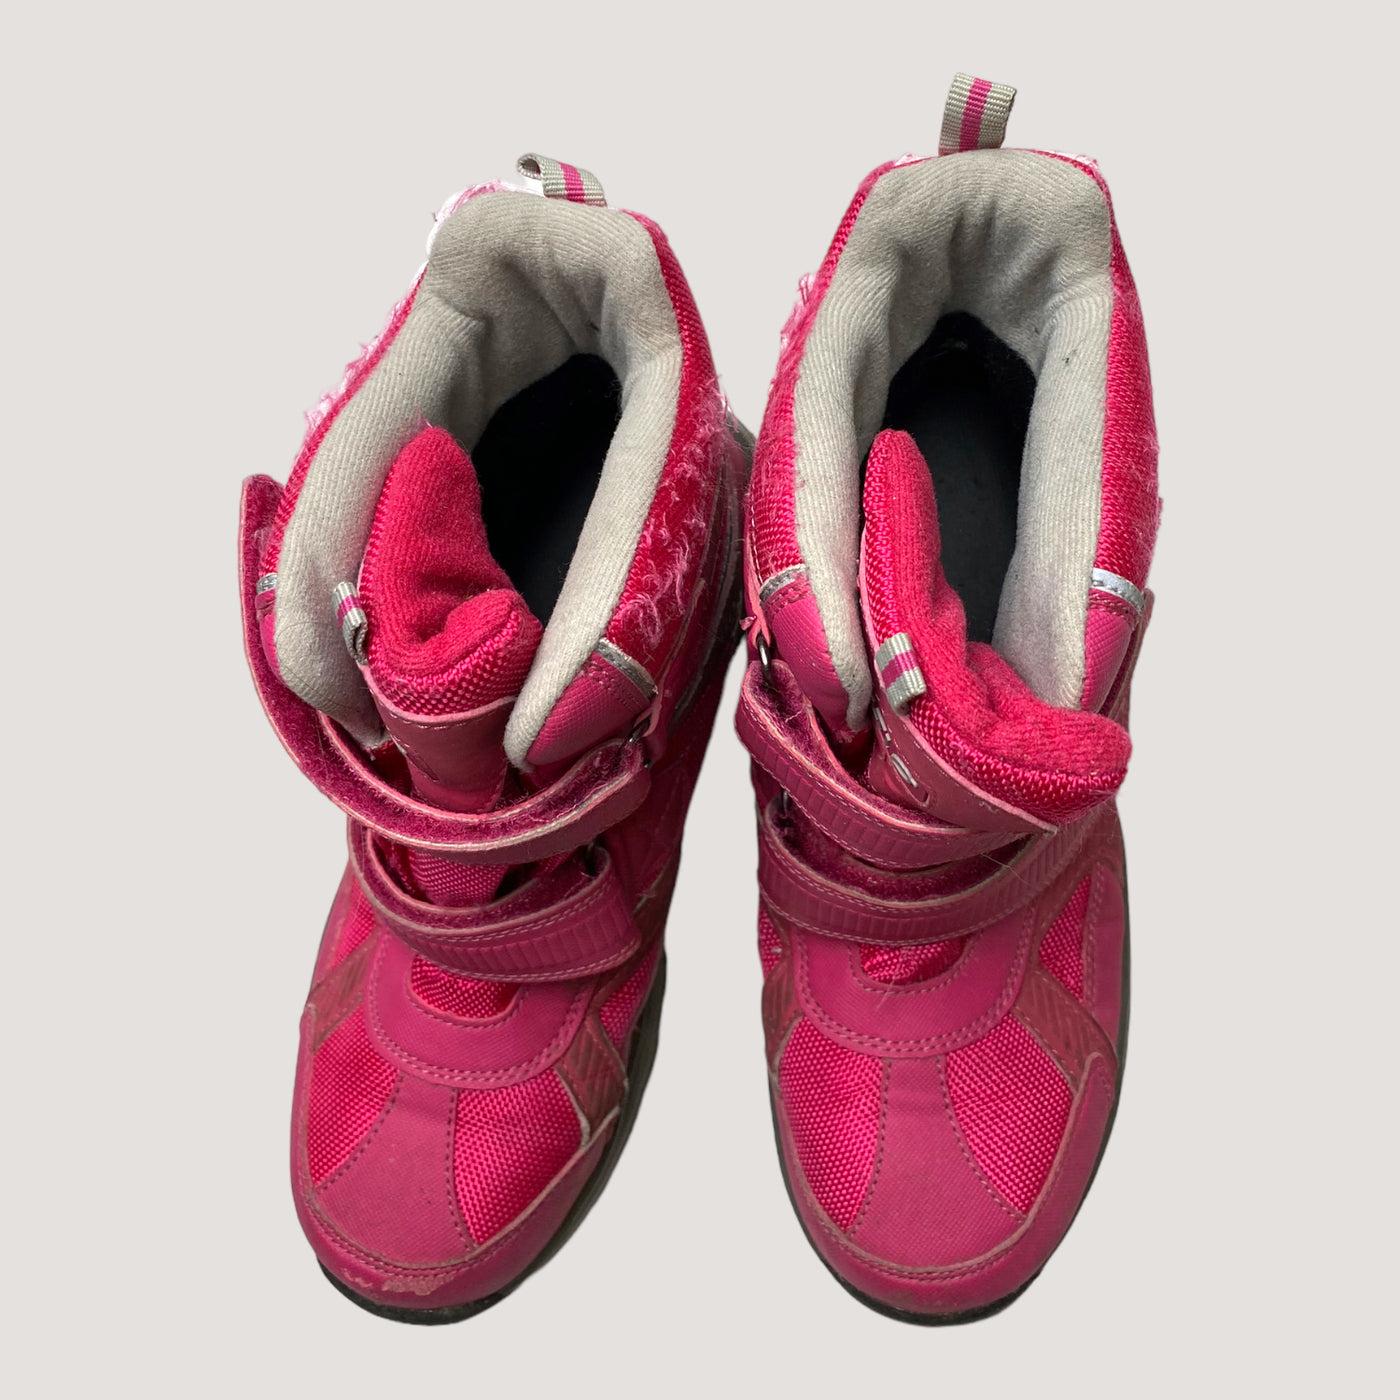 Reima midseason shoes, hot pink | 37